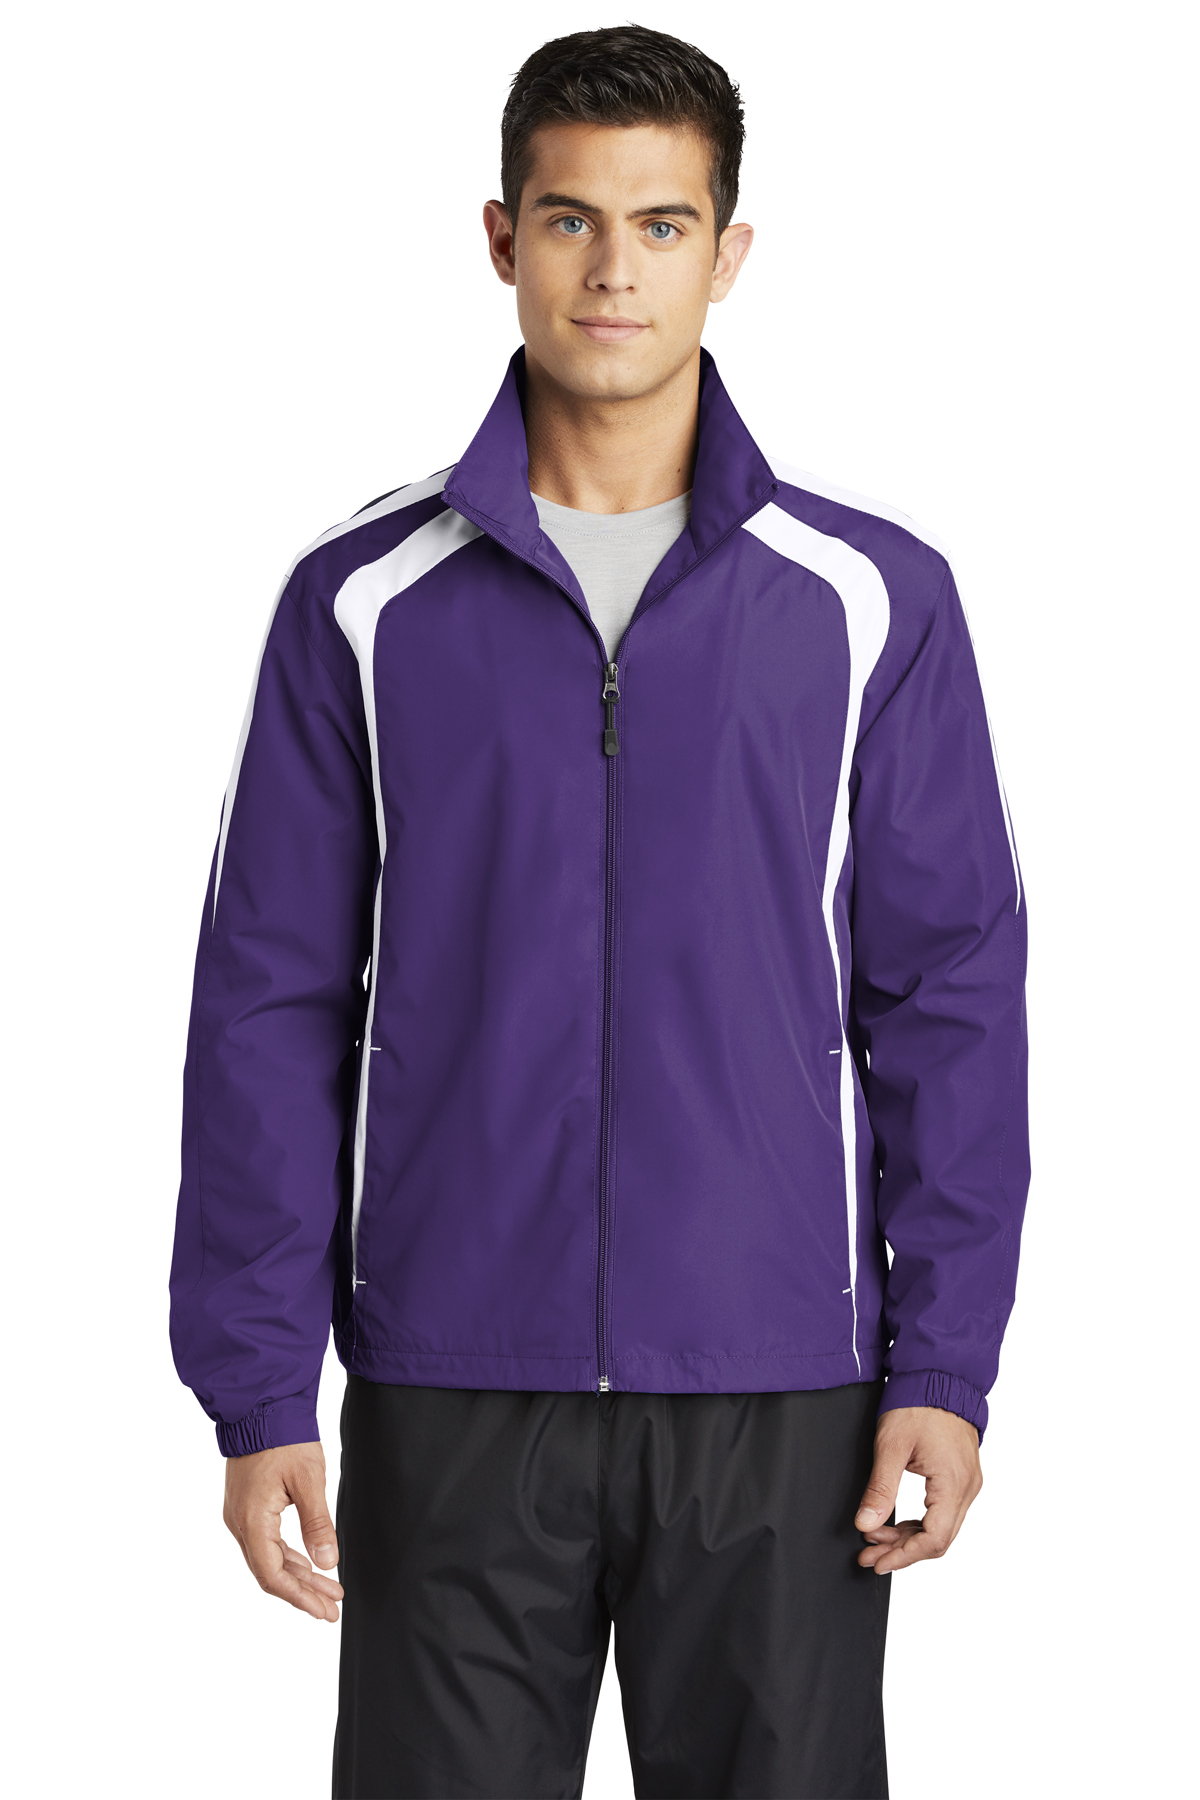 Medium Purple / White JST60 Colorblock Raglan Jacket Sport-Tek